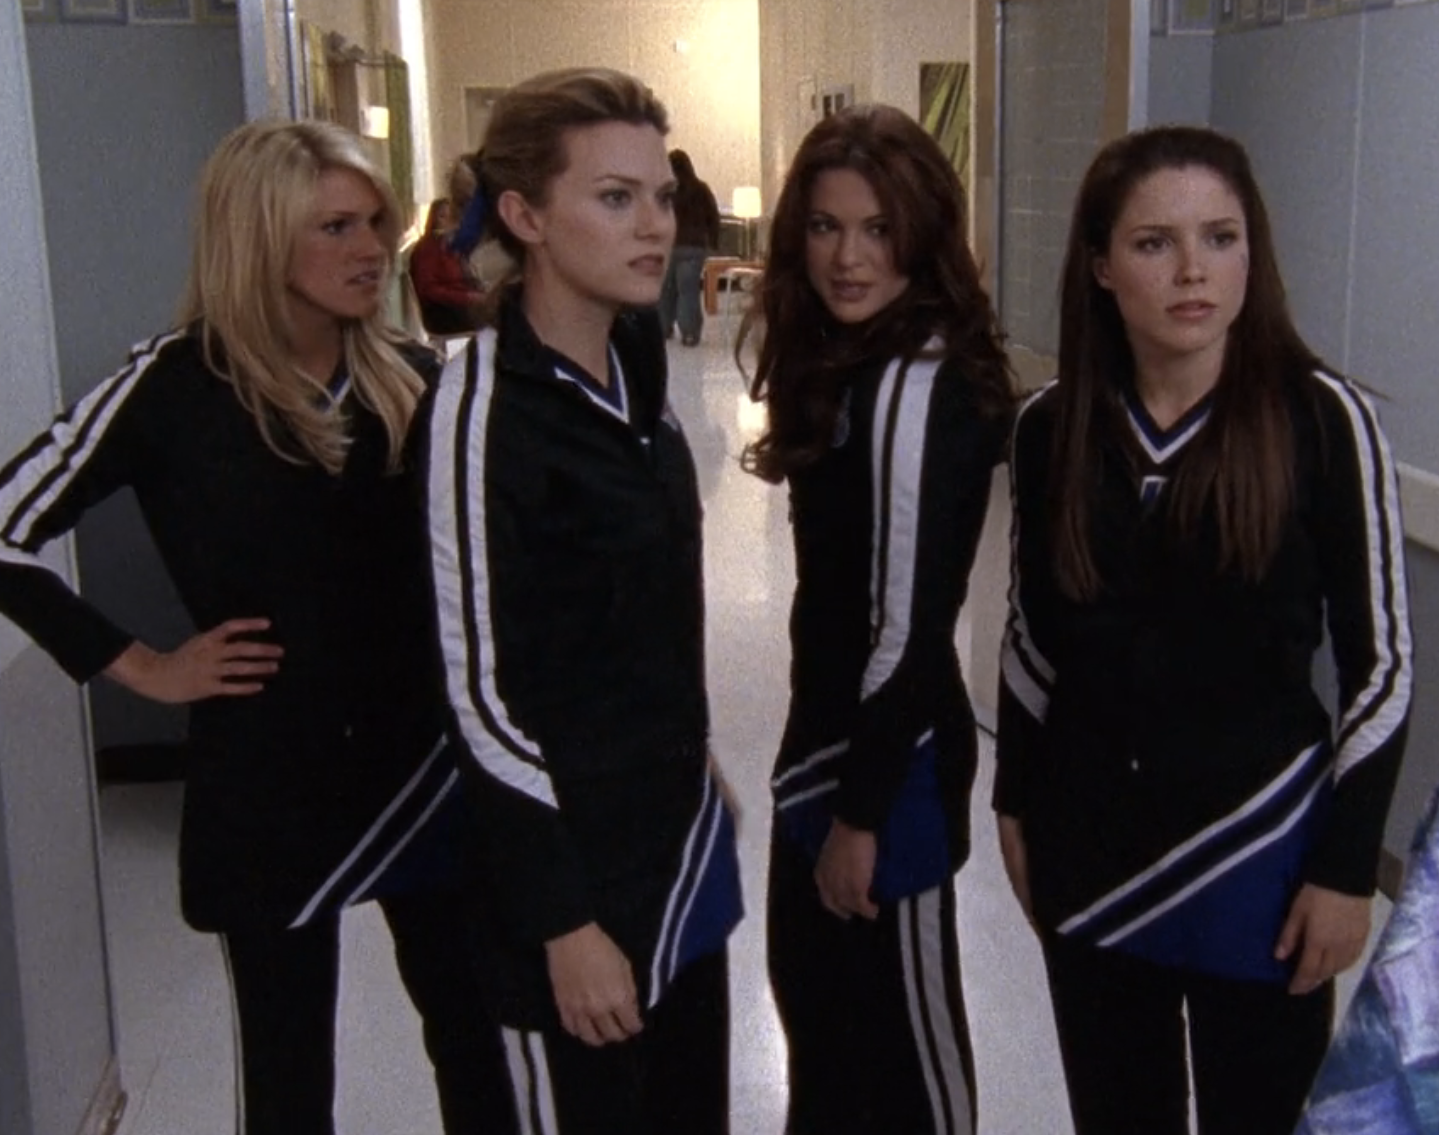 the girls in cheerleading uniforms